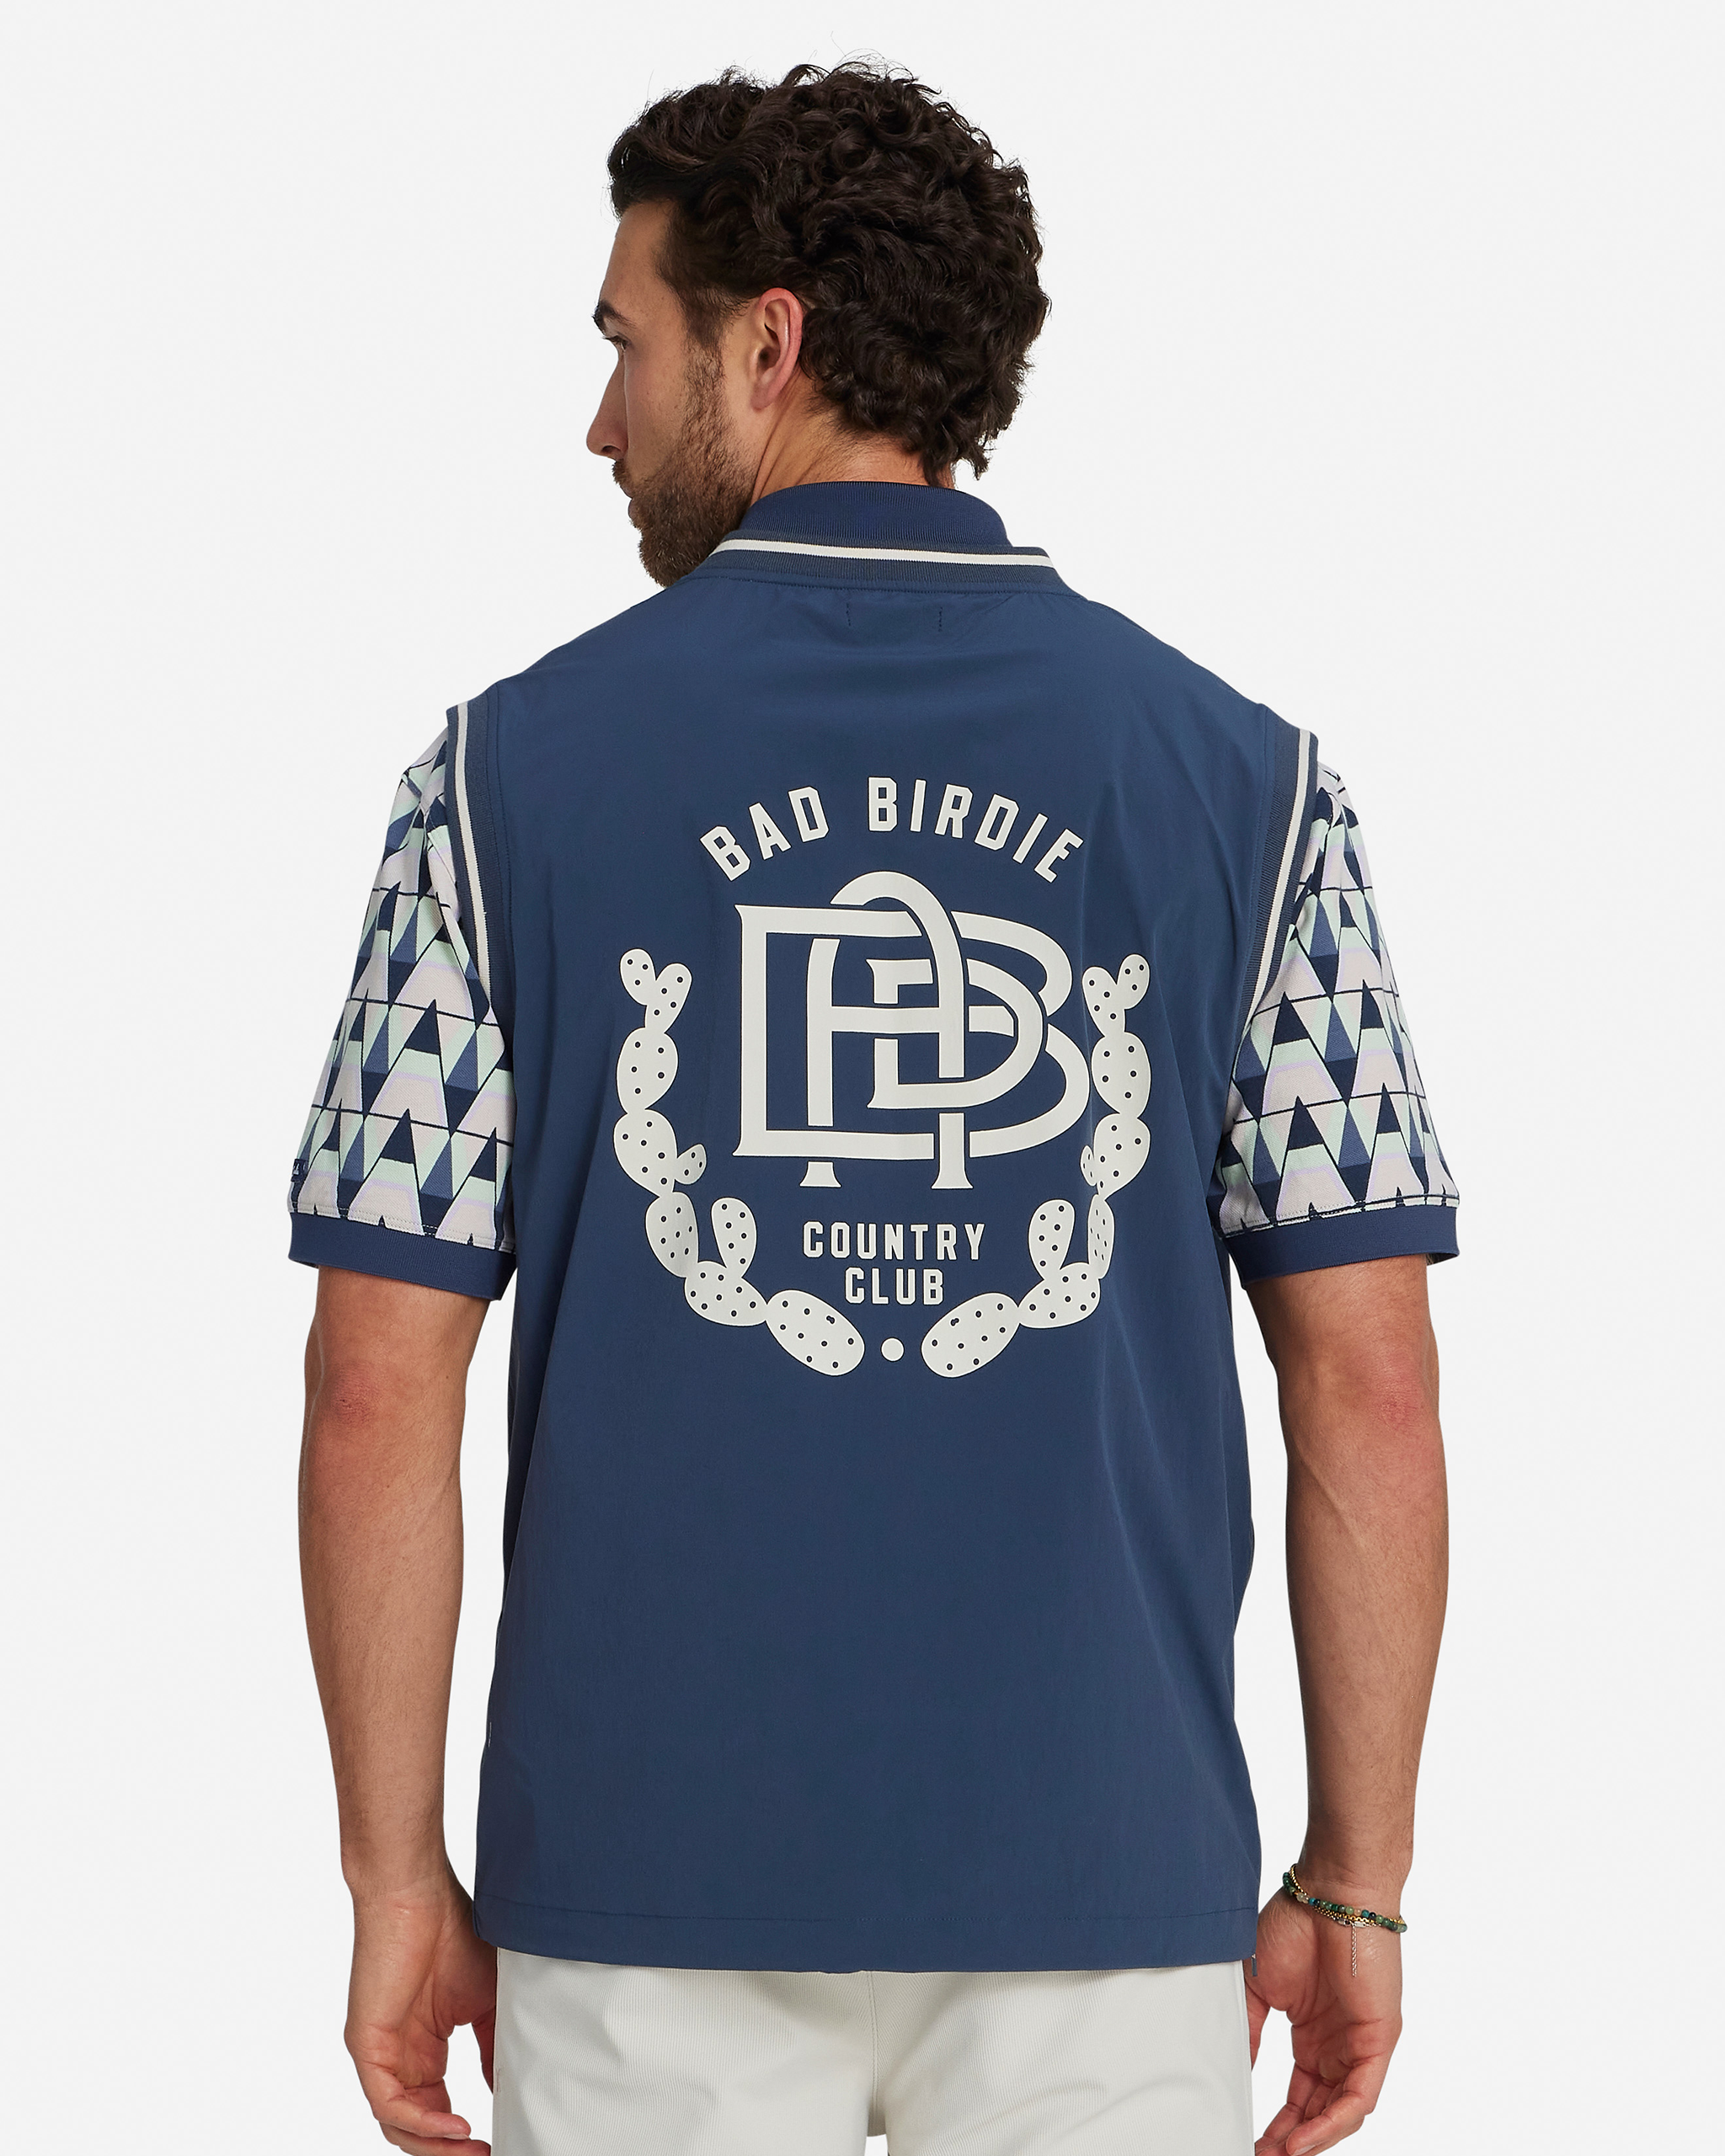 Bad Birdie Golf Shirts Shark Tank Season 11